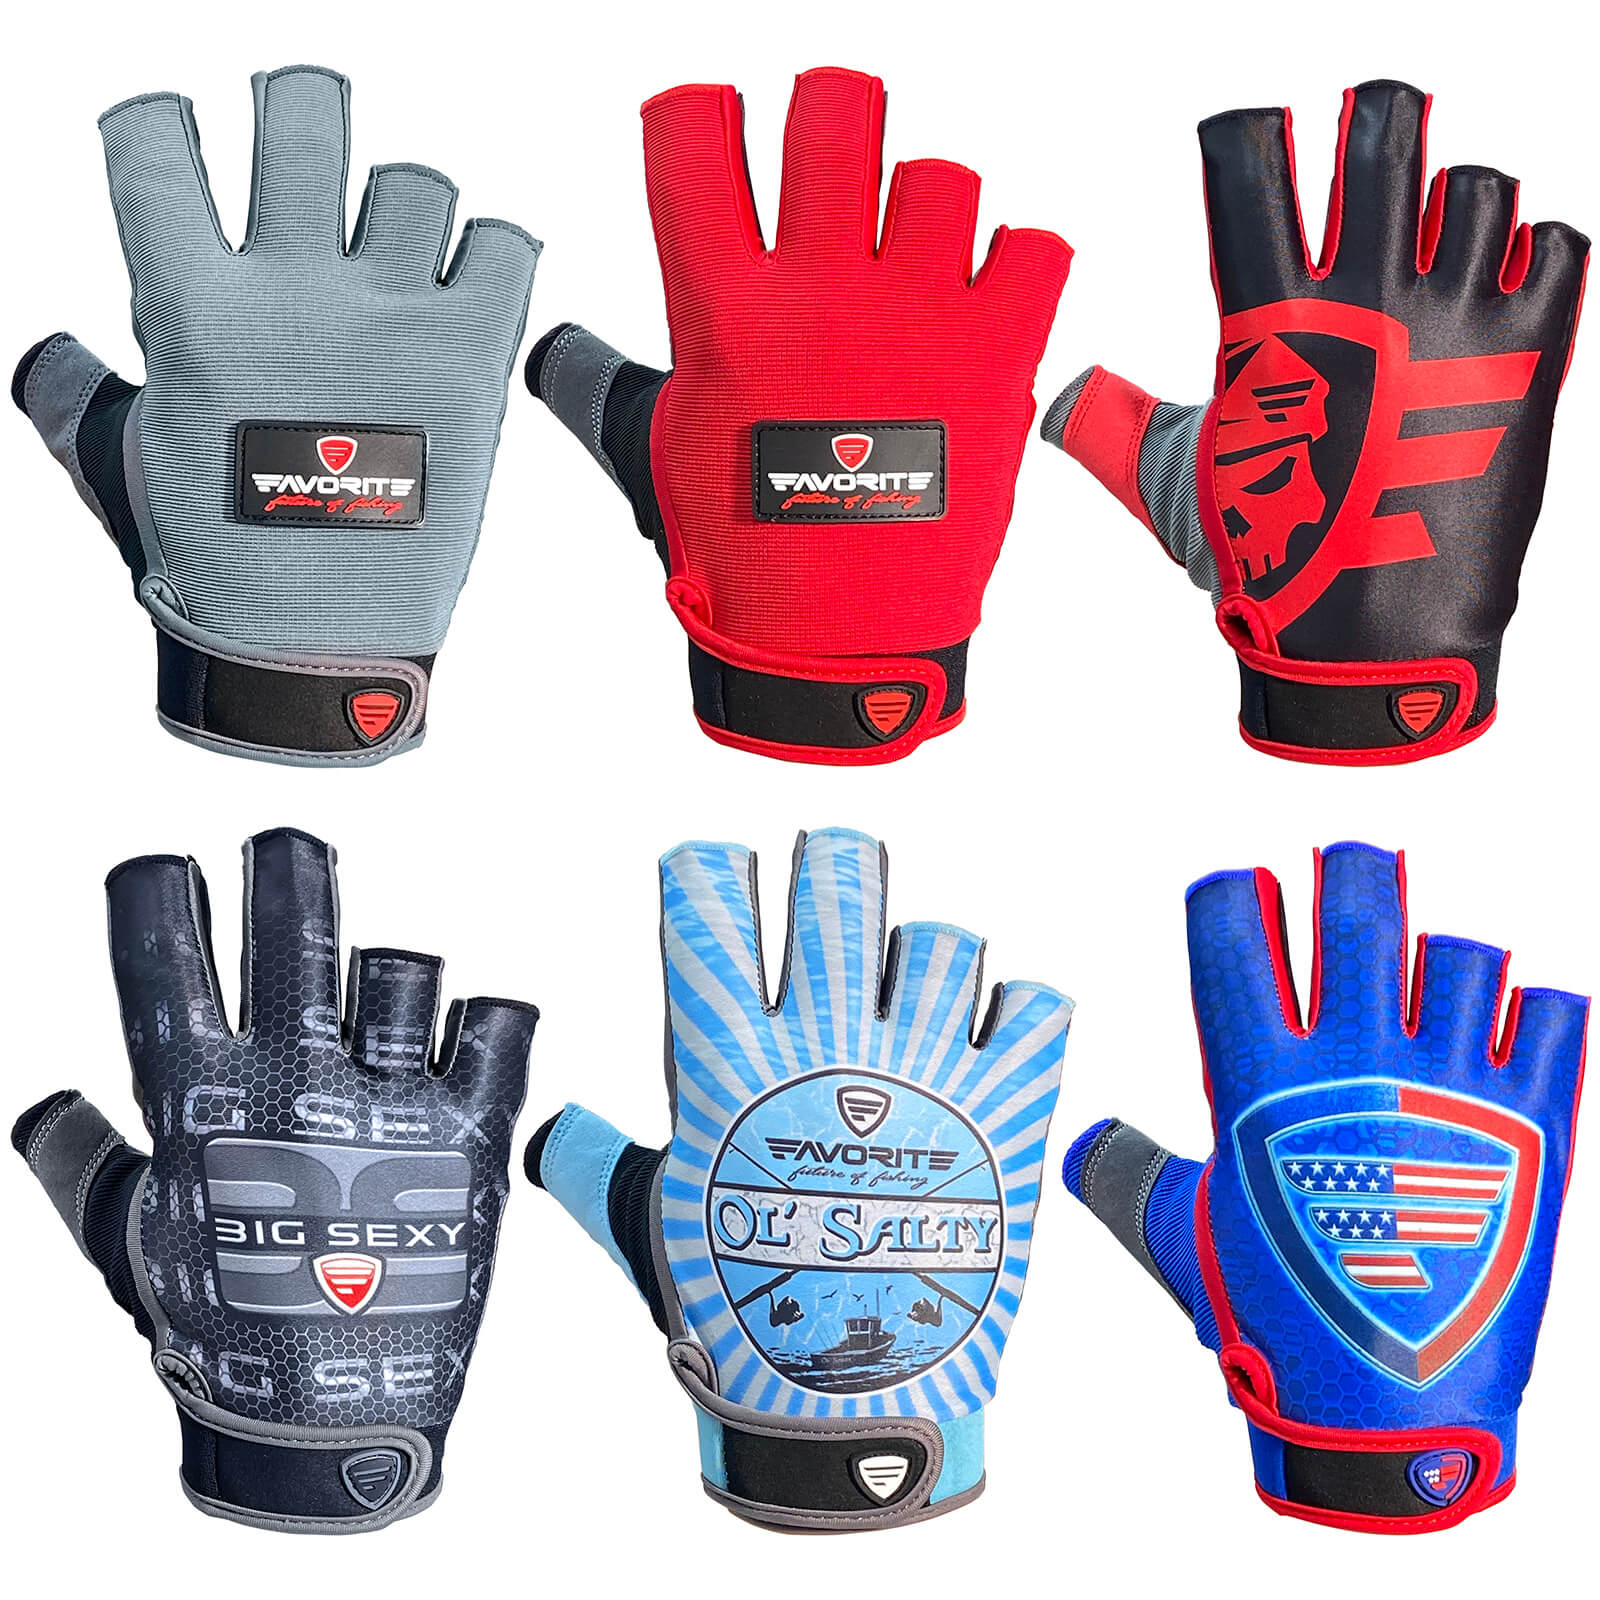 Cuda Bait Gloves for Fishing, Neoprene, Microfiber, Extra Large